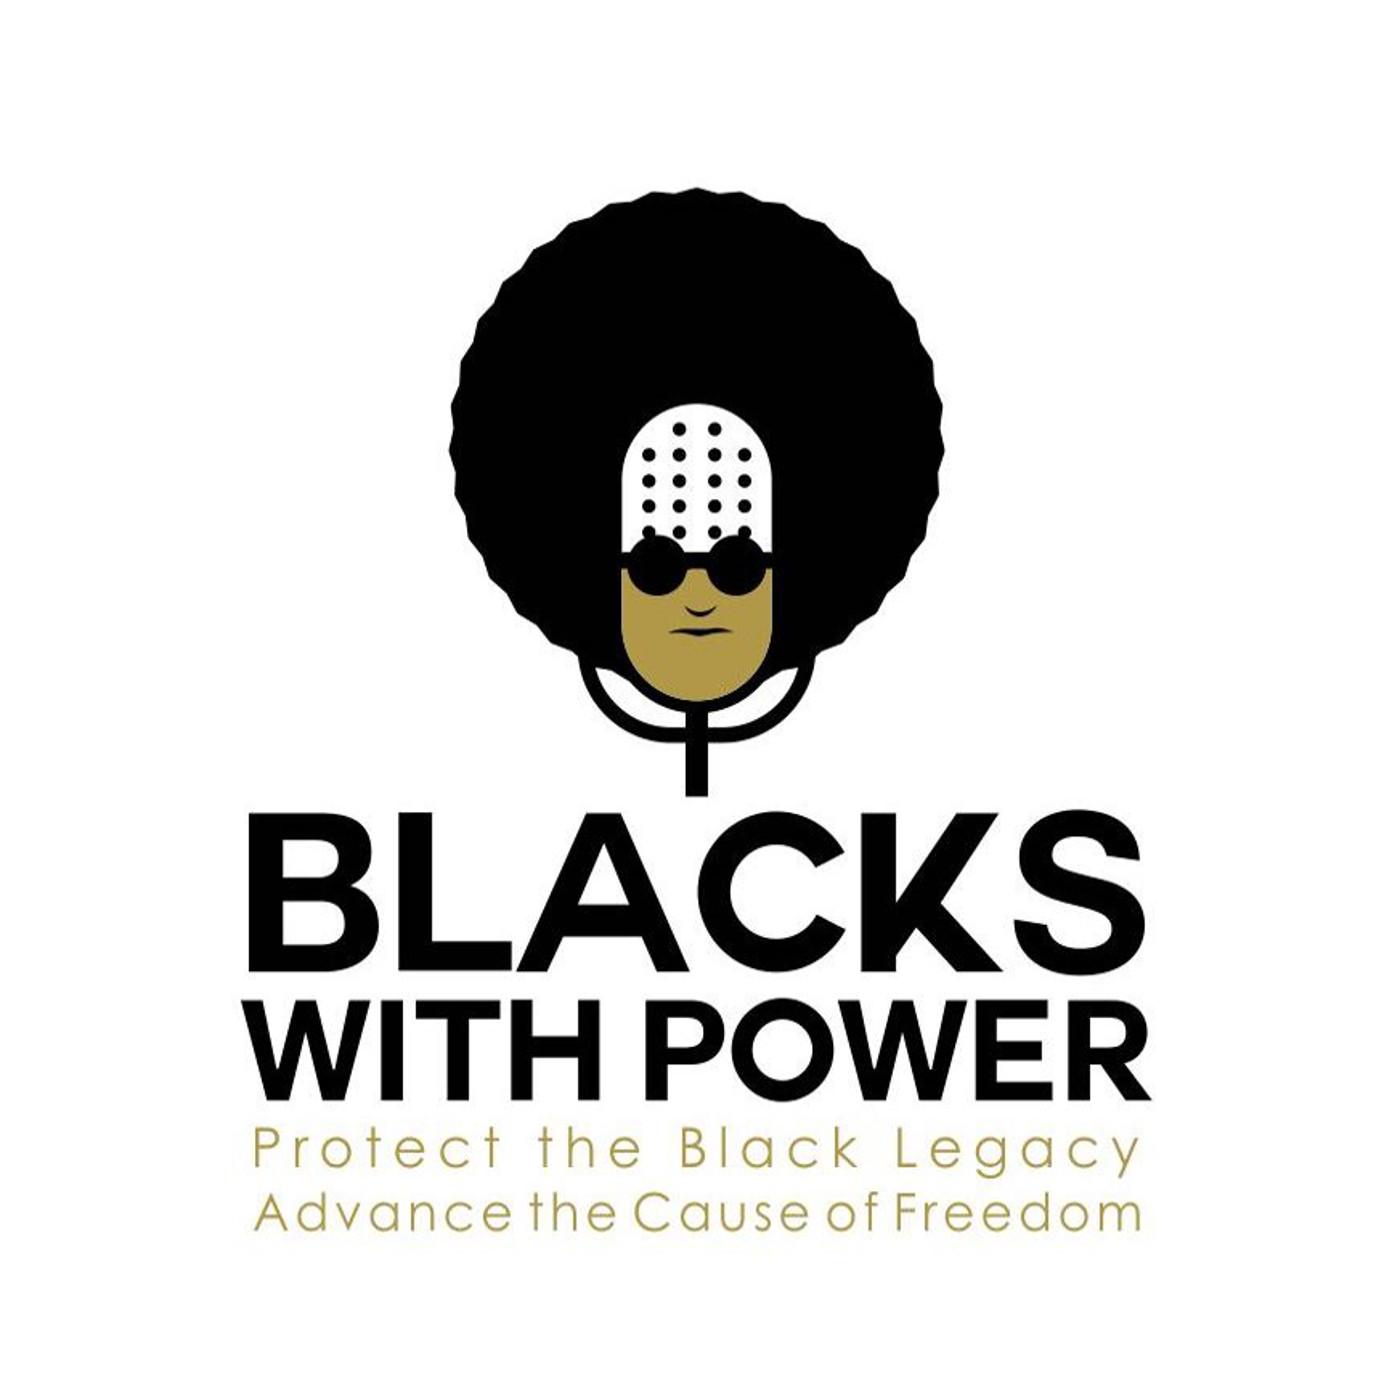 Black Power Logo - Blacks with Power. Make America Great through Black Power